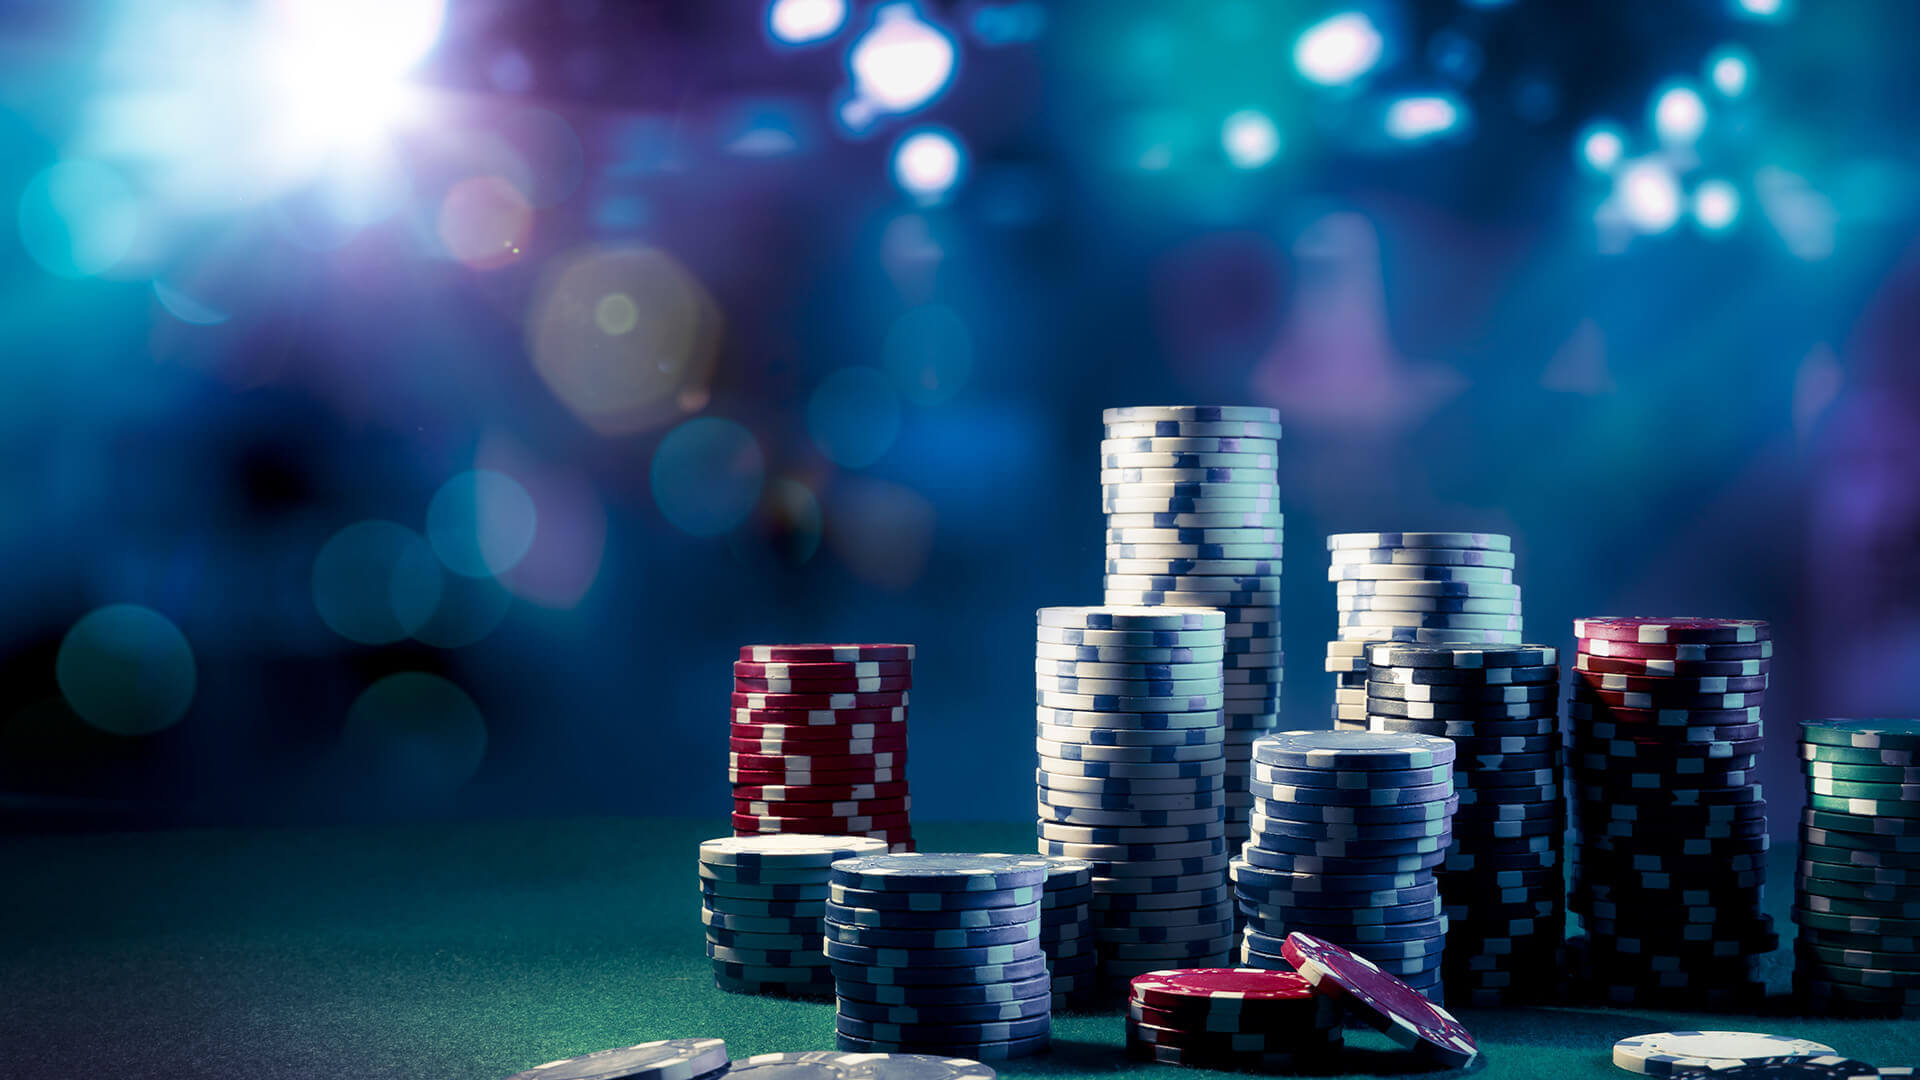 best online casinos free bonus